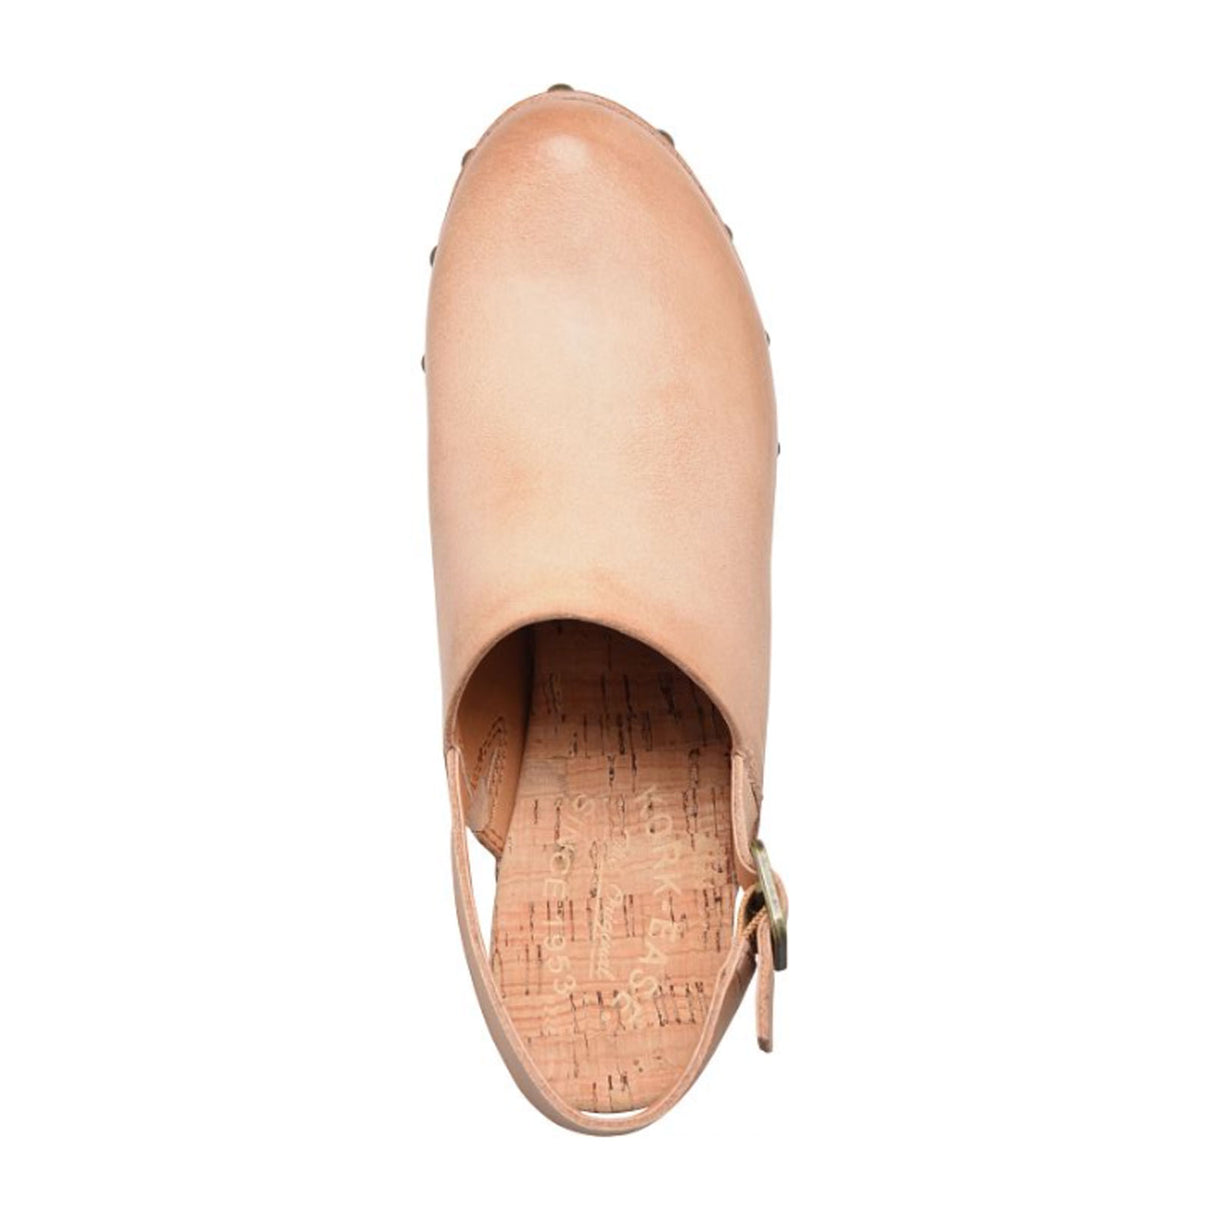 Kork-Ease Darby Heeled Sandal (Women) - Natural (Nude) Sandals - Heeled - The Heel Shoe Fitters